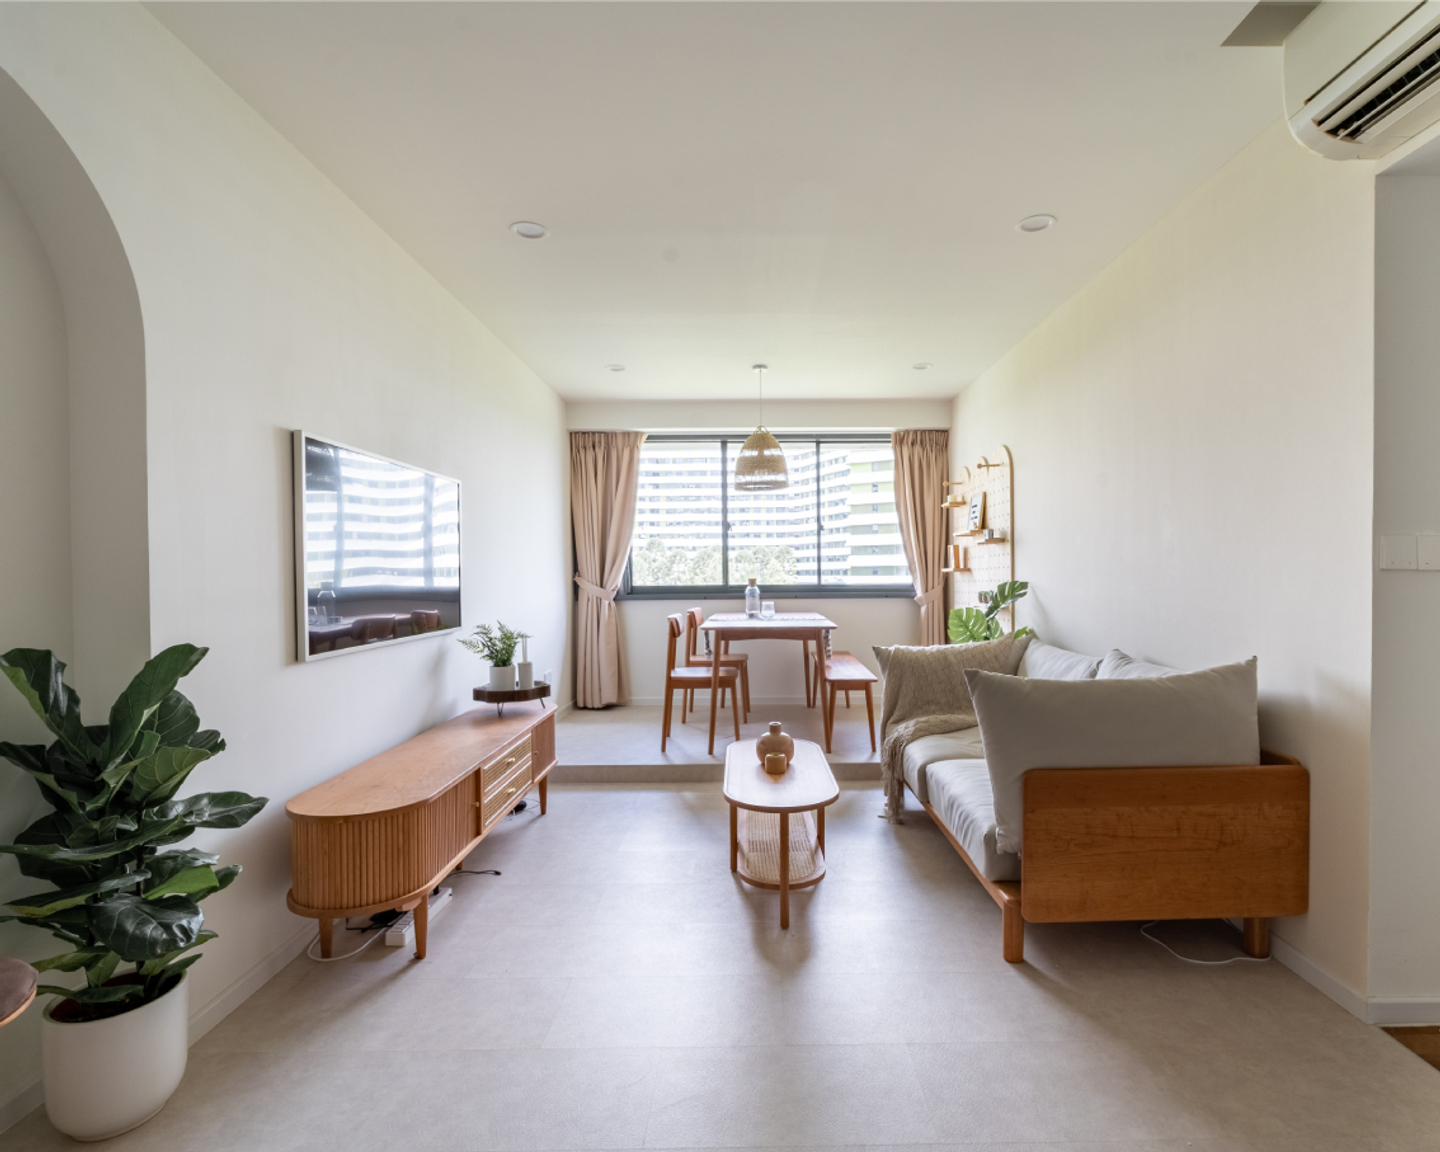 Living Room Design With Scandinavian Interior - Livspace